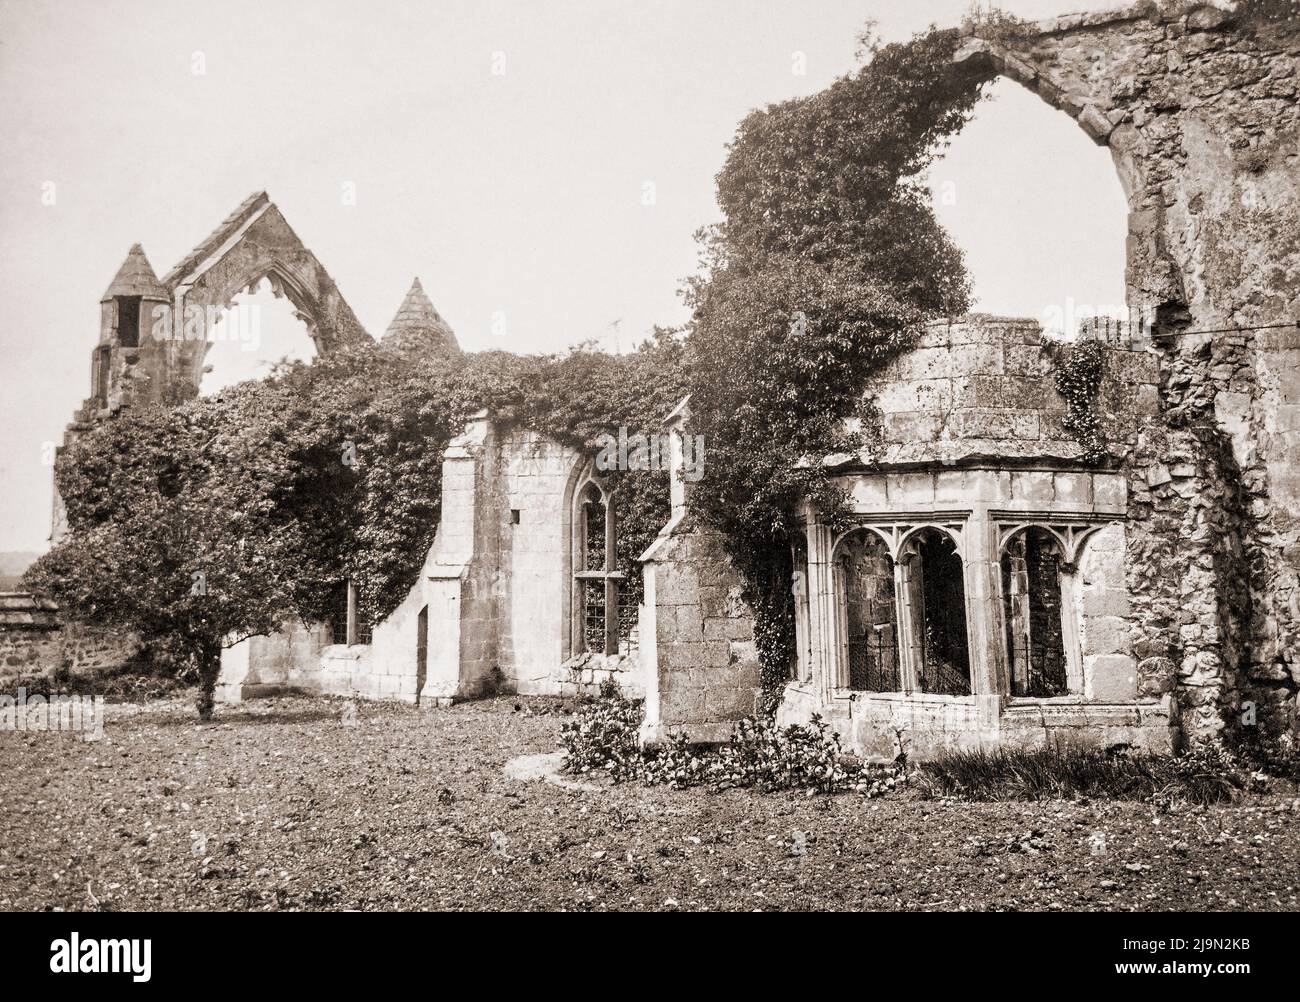 Abadía de Haughmond, Shrewsbury, Inglaterra, Reino Unido, alrededor de 1885 Foto de stock